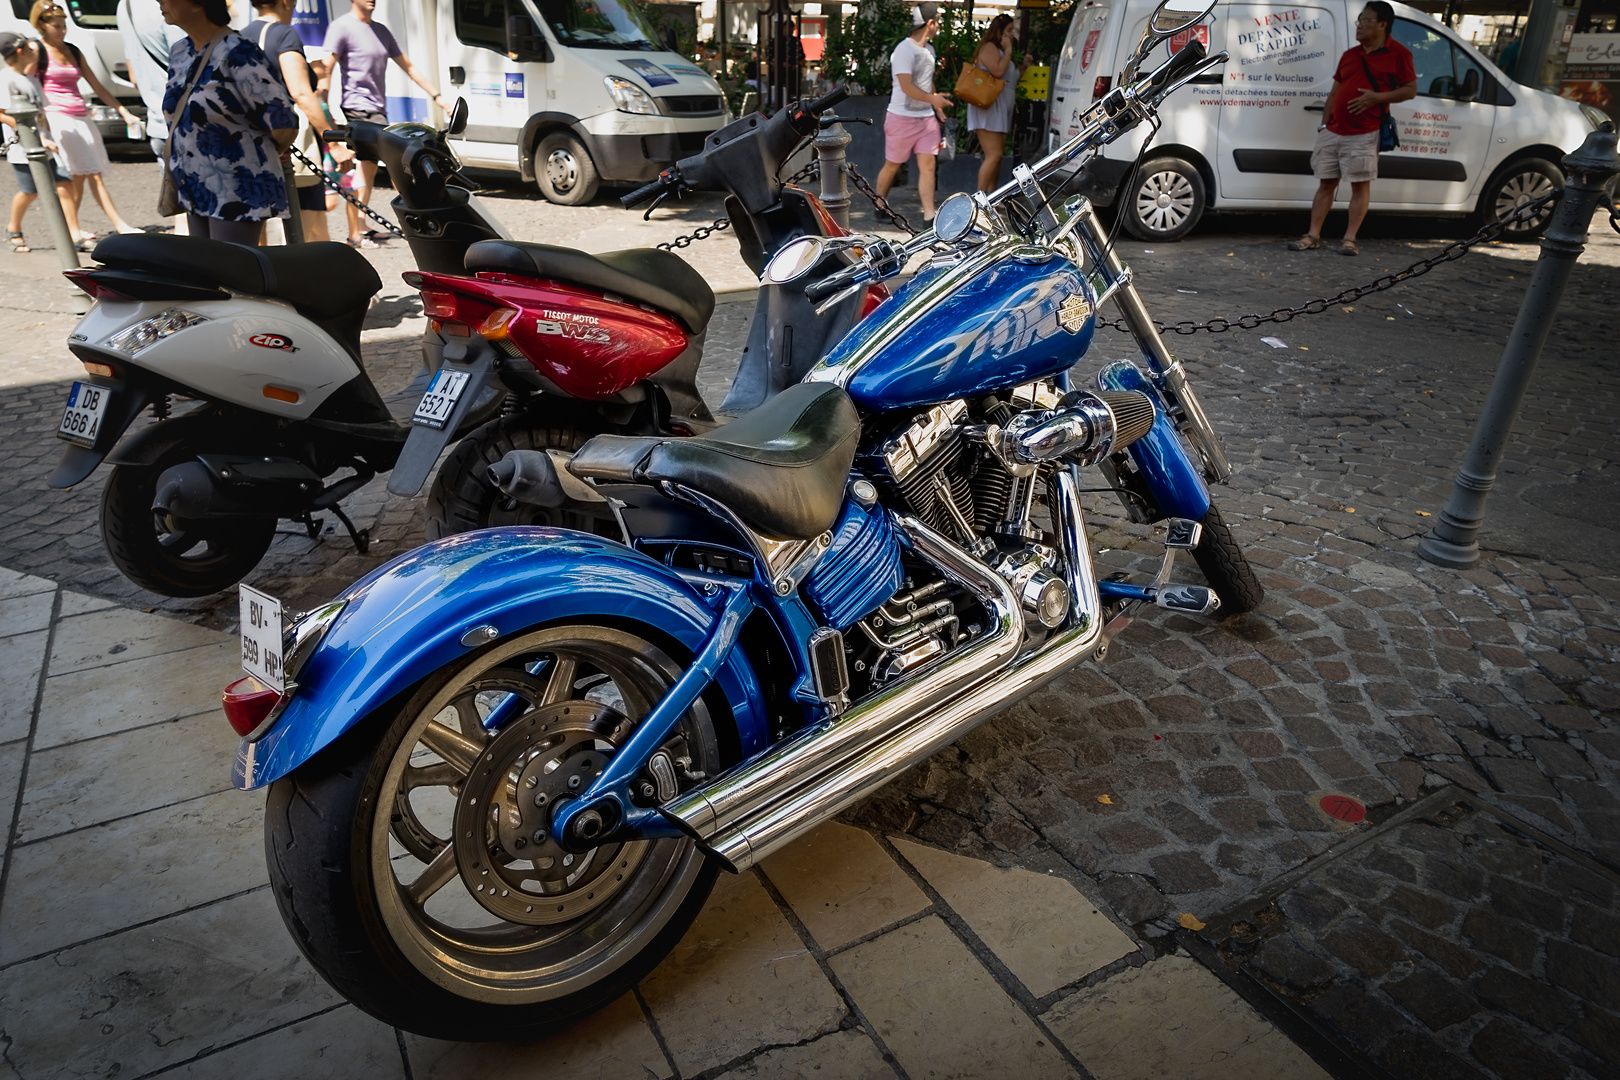 Blue Harley Davidson